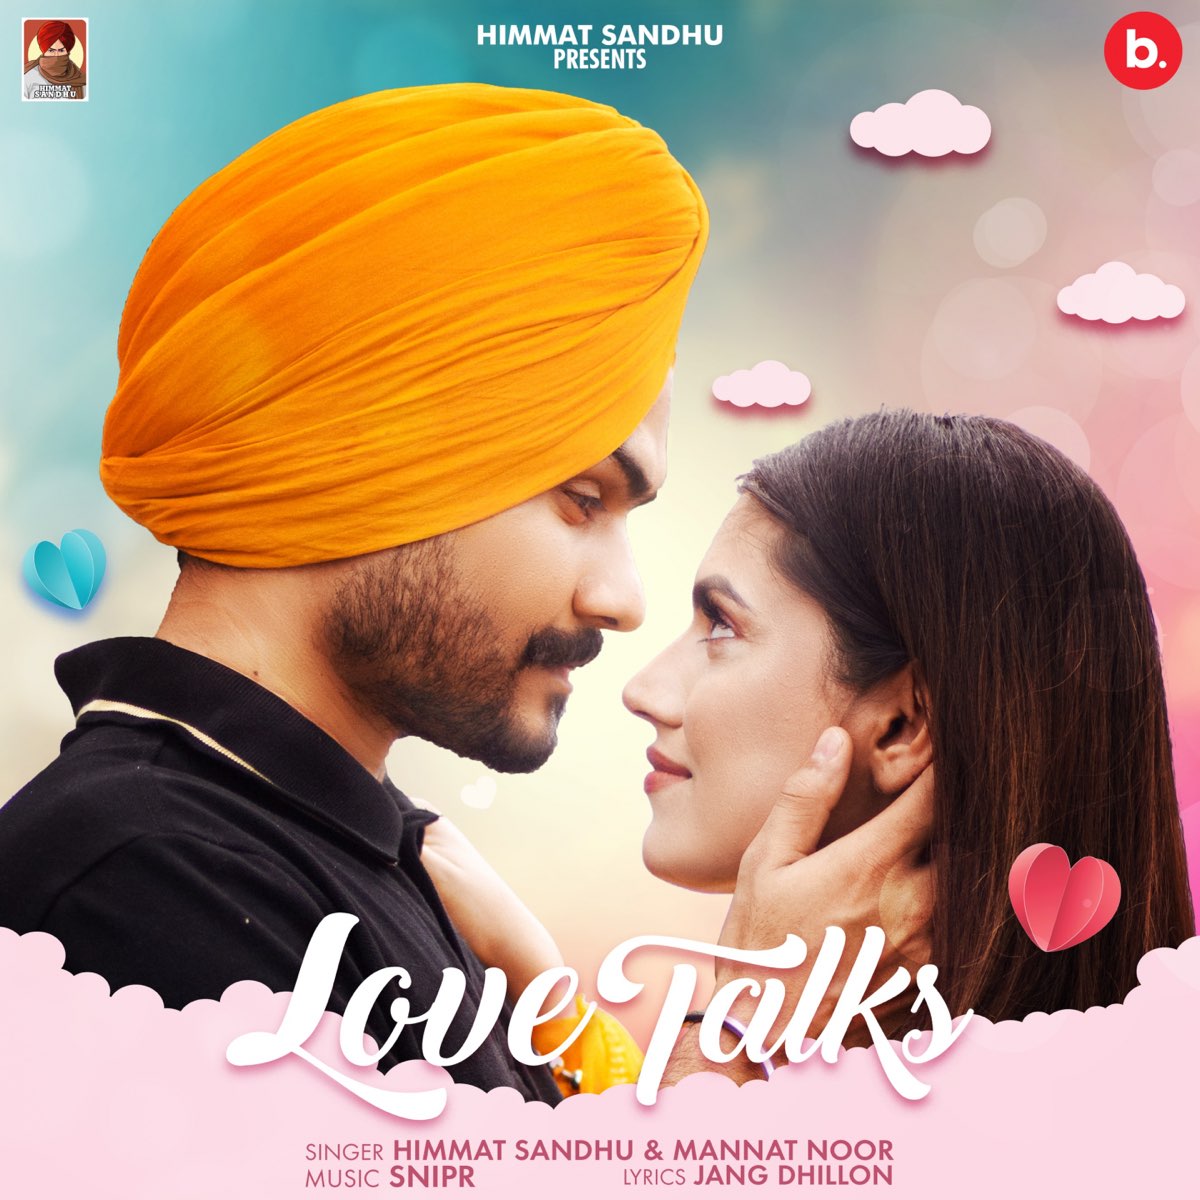 Love Talks - Single - Album by Himmat Sandhu - Apple Music